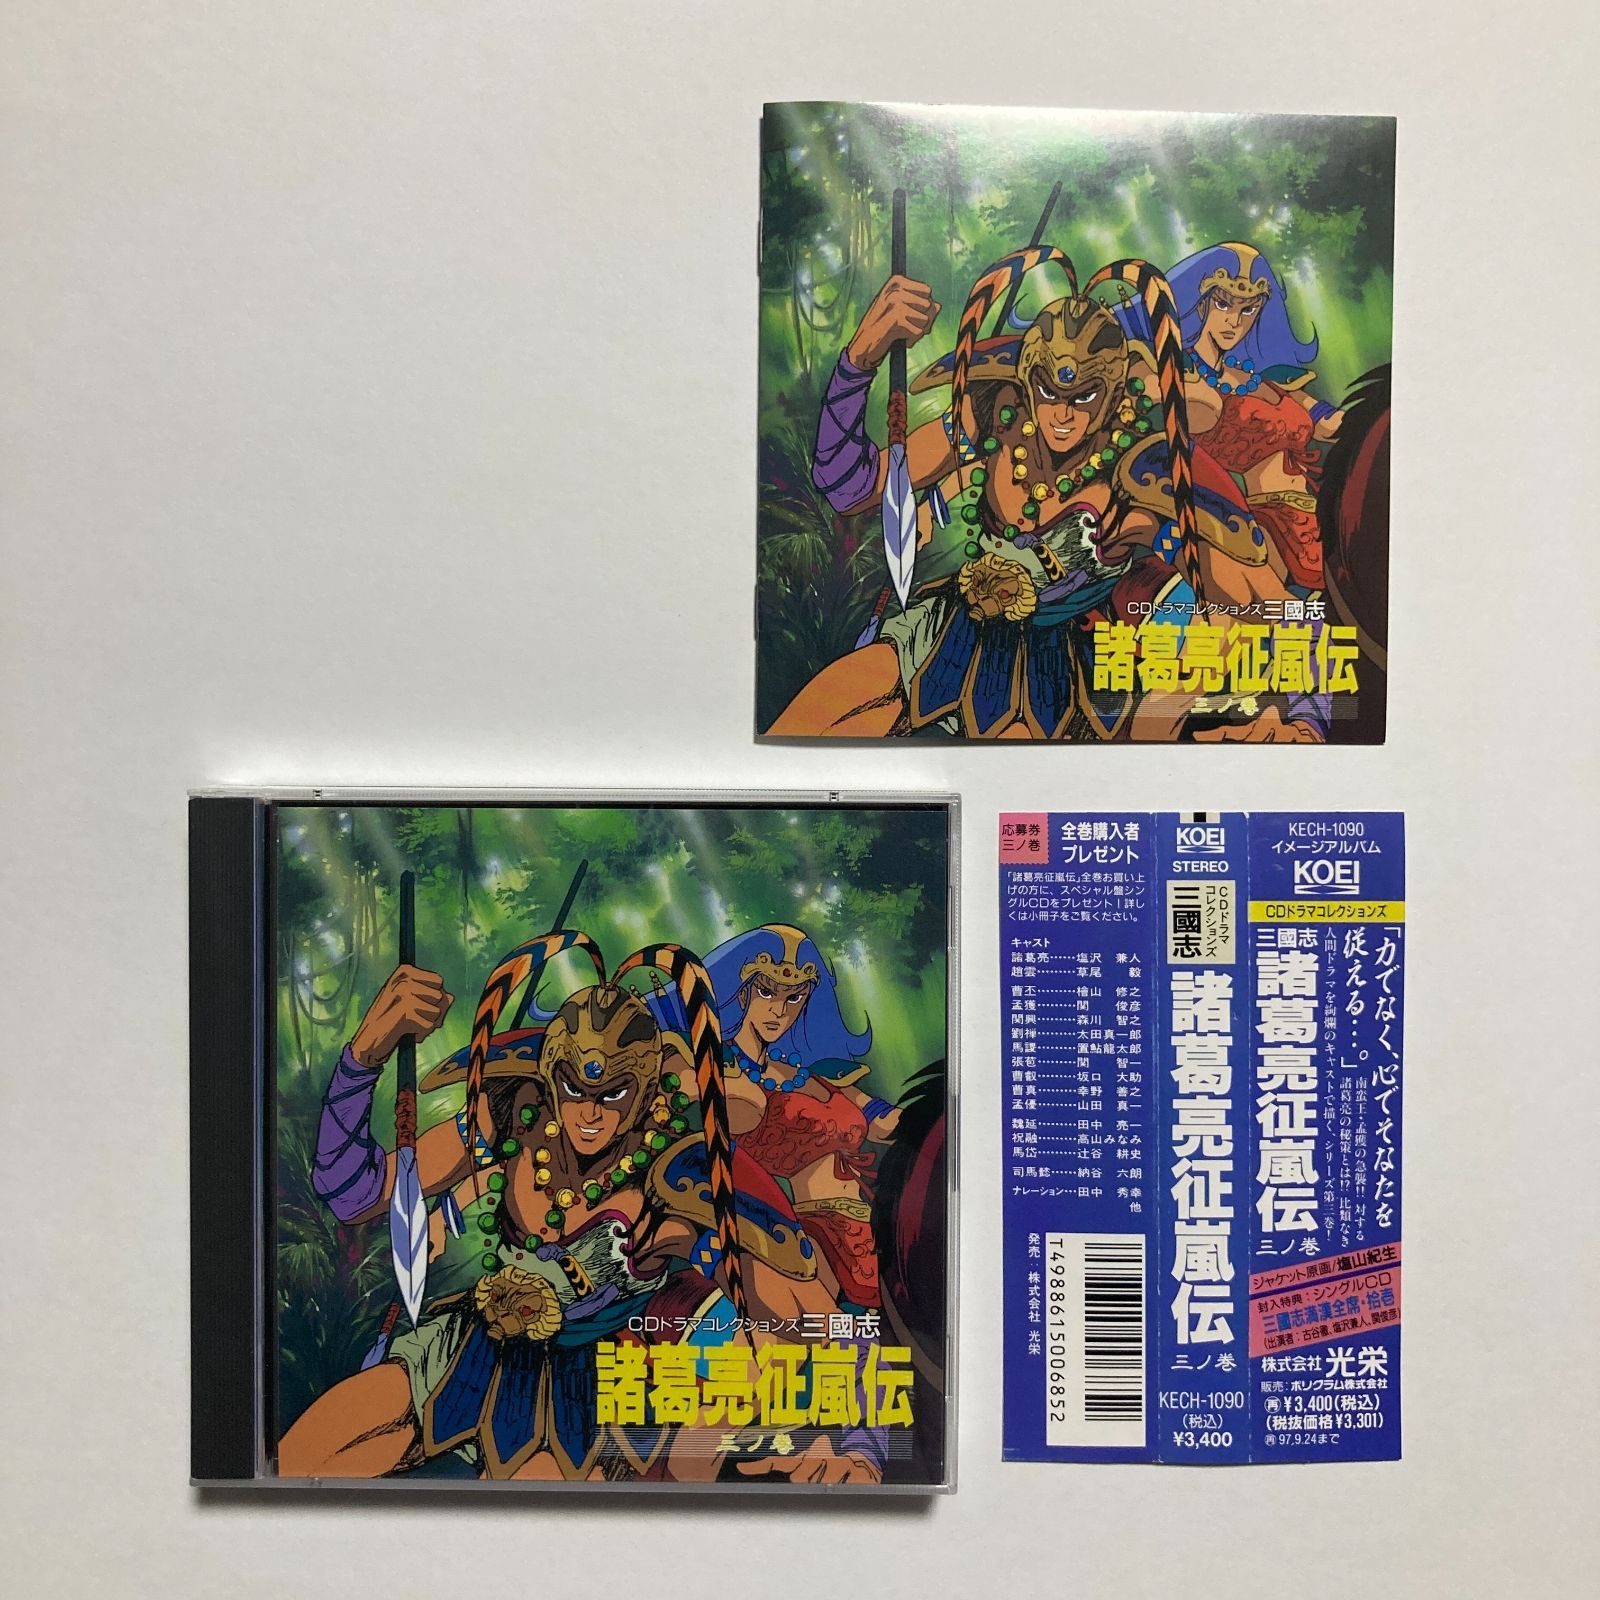 CD】三國志 / 諸葛亮征嵐伝 三ノ巻 - メルカリ